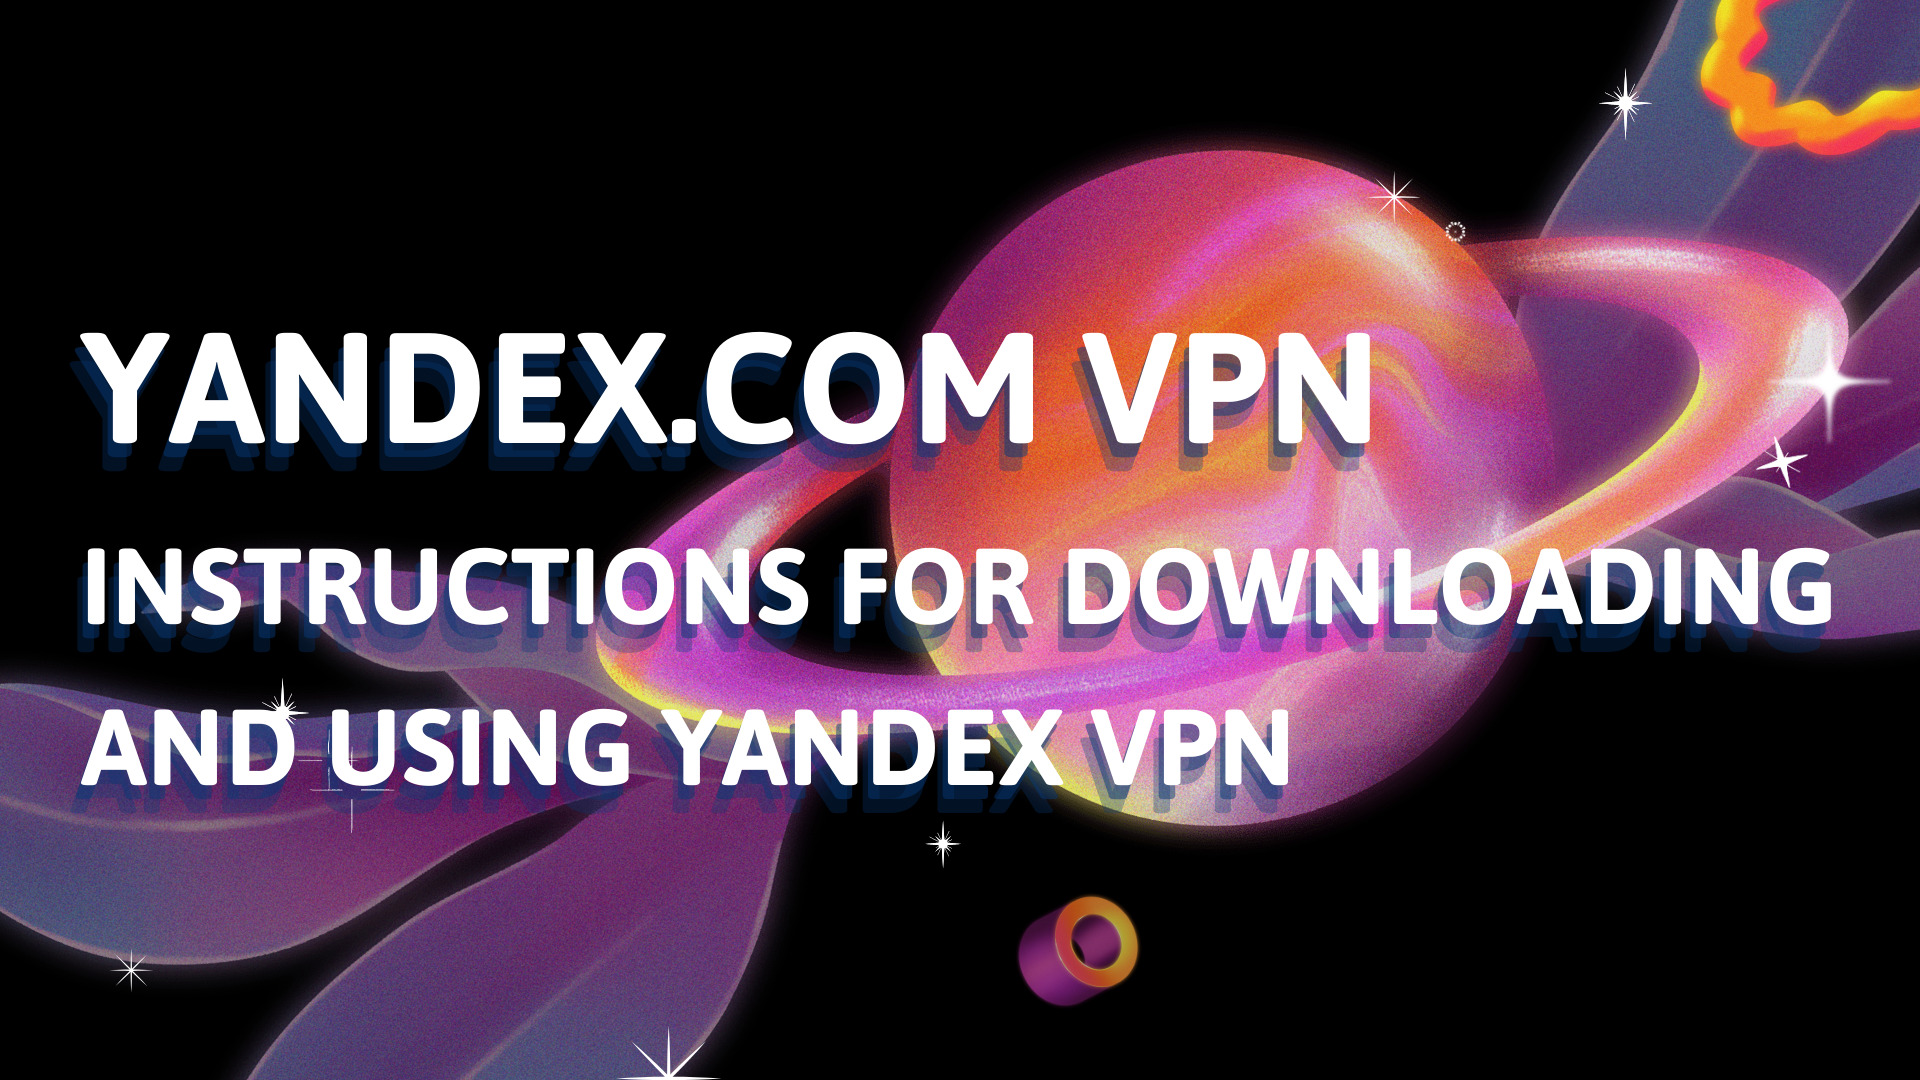 Yandex.com VPN: Instructions for downloading and using Yandex VPN